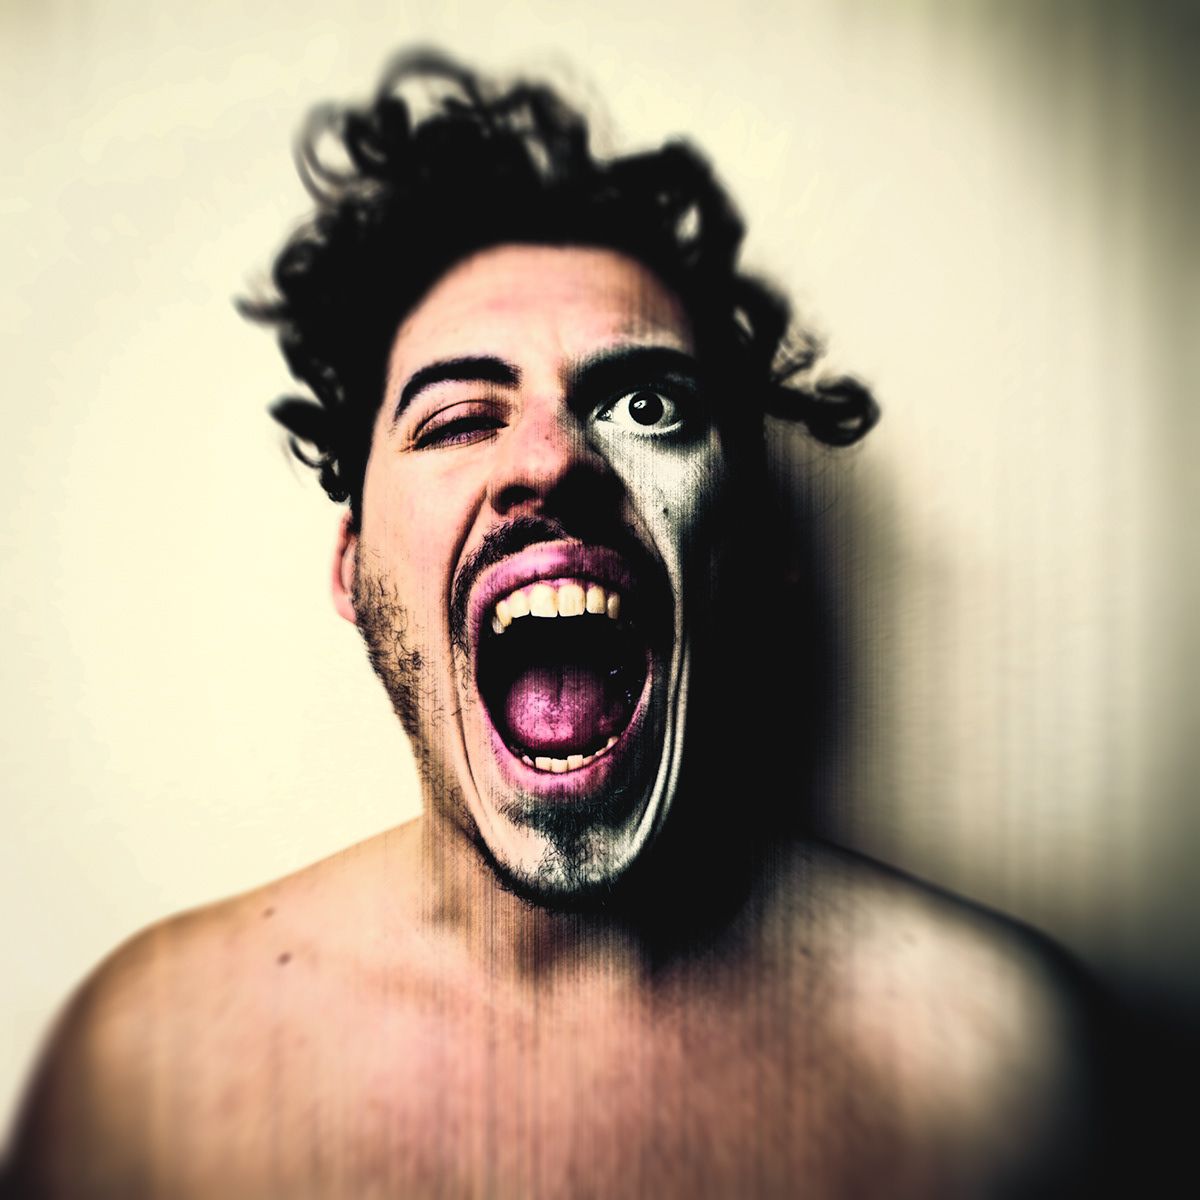 scream photo portrait violence surreal Awakening genesis dark man people blur manipulation photoshop